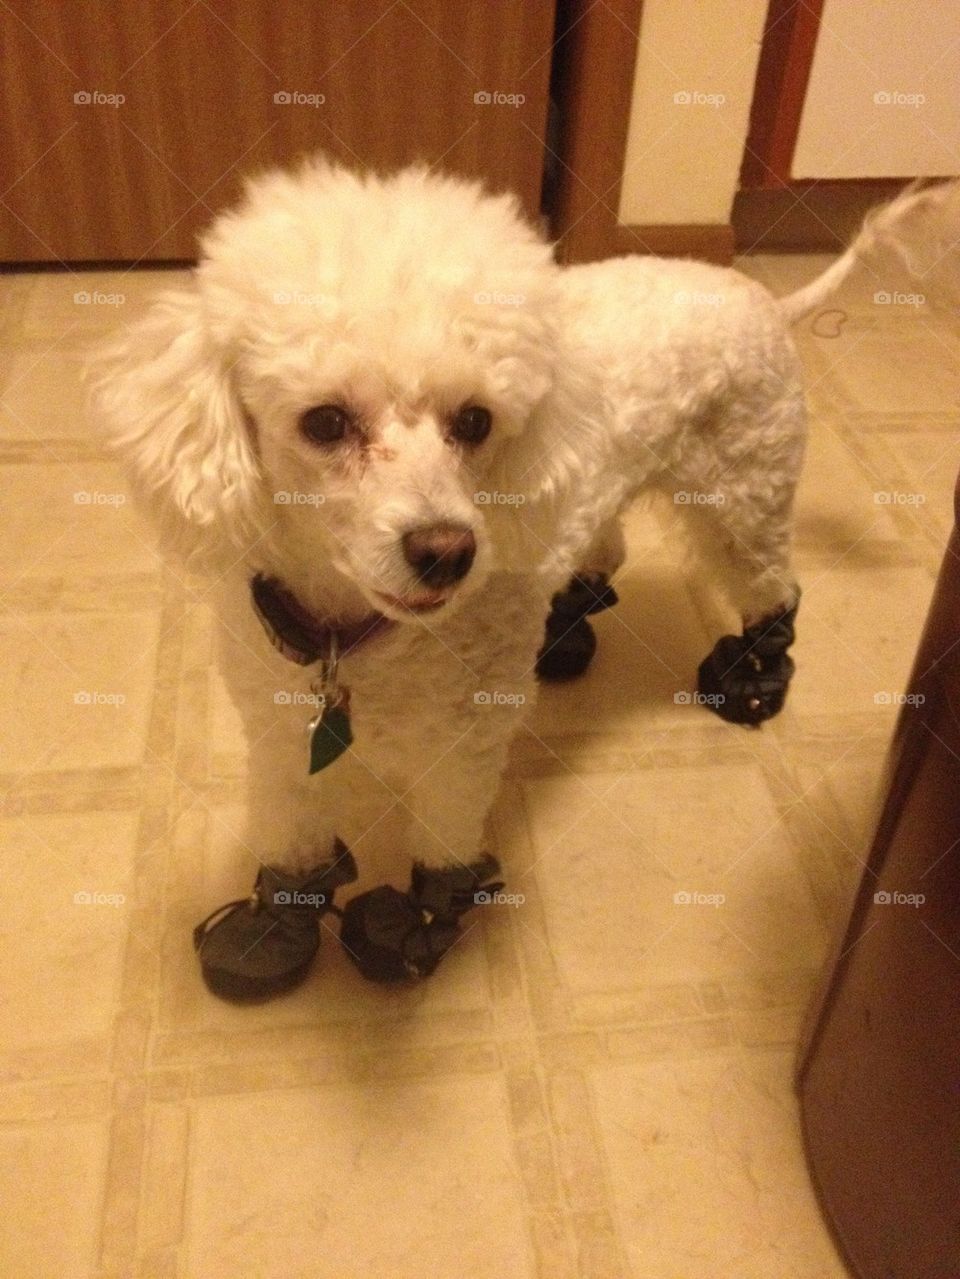 Dog boots